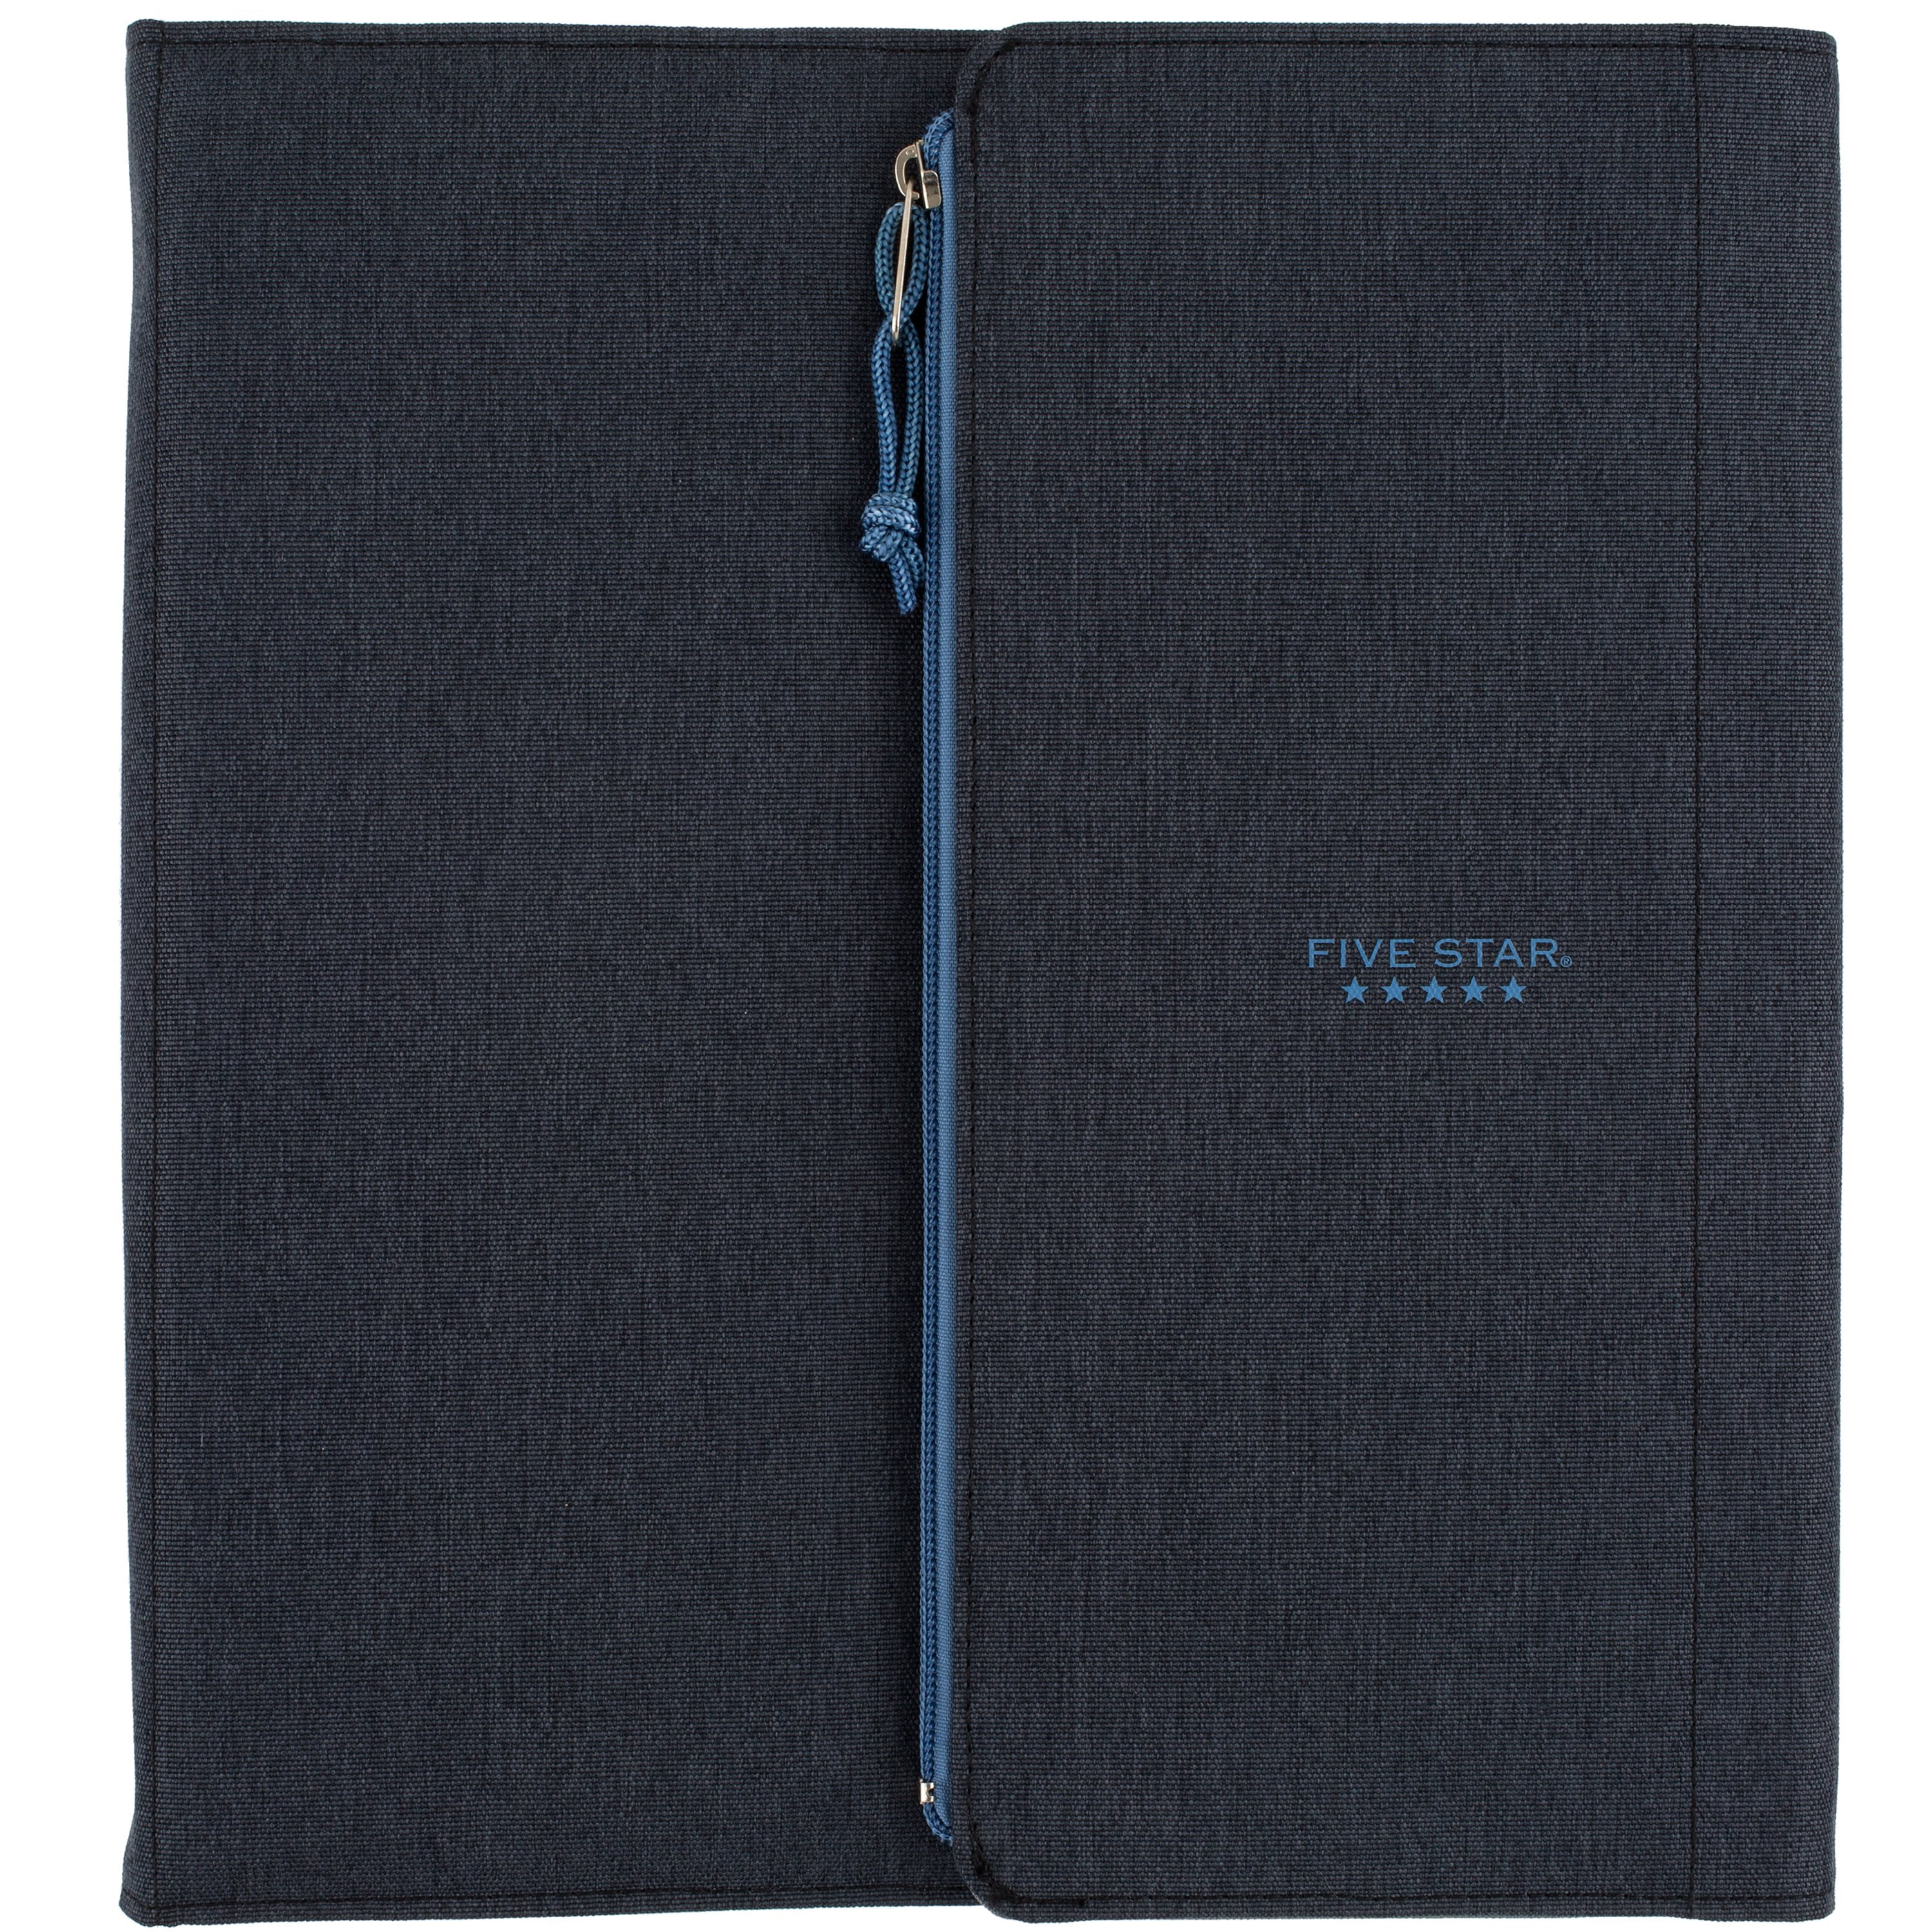 Five Star Mead Zipper Binder 1.5 in Pocket Notebook rings CHOOSE COLOR 